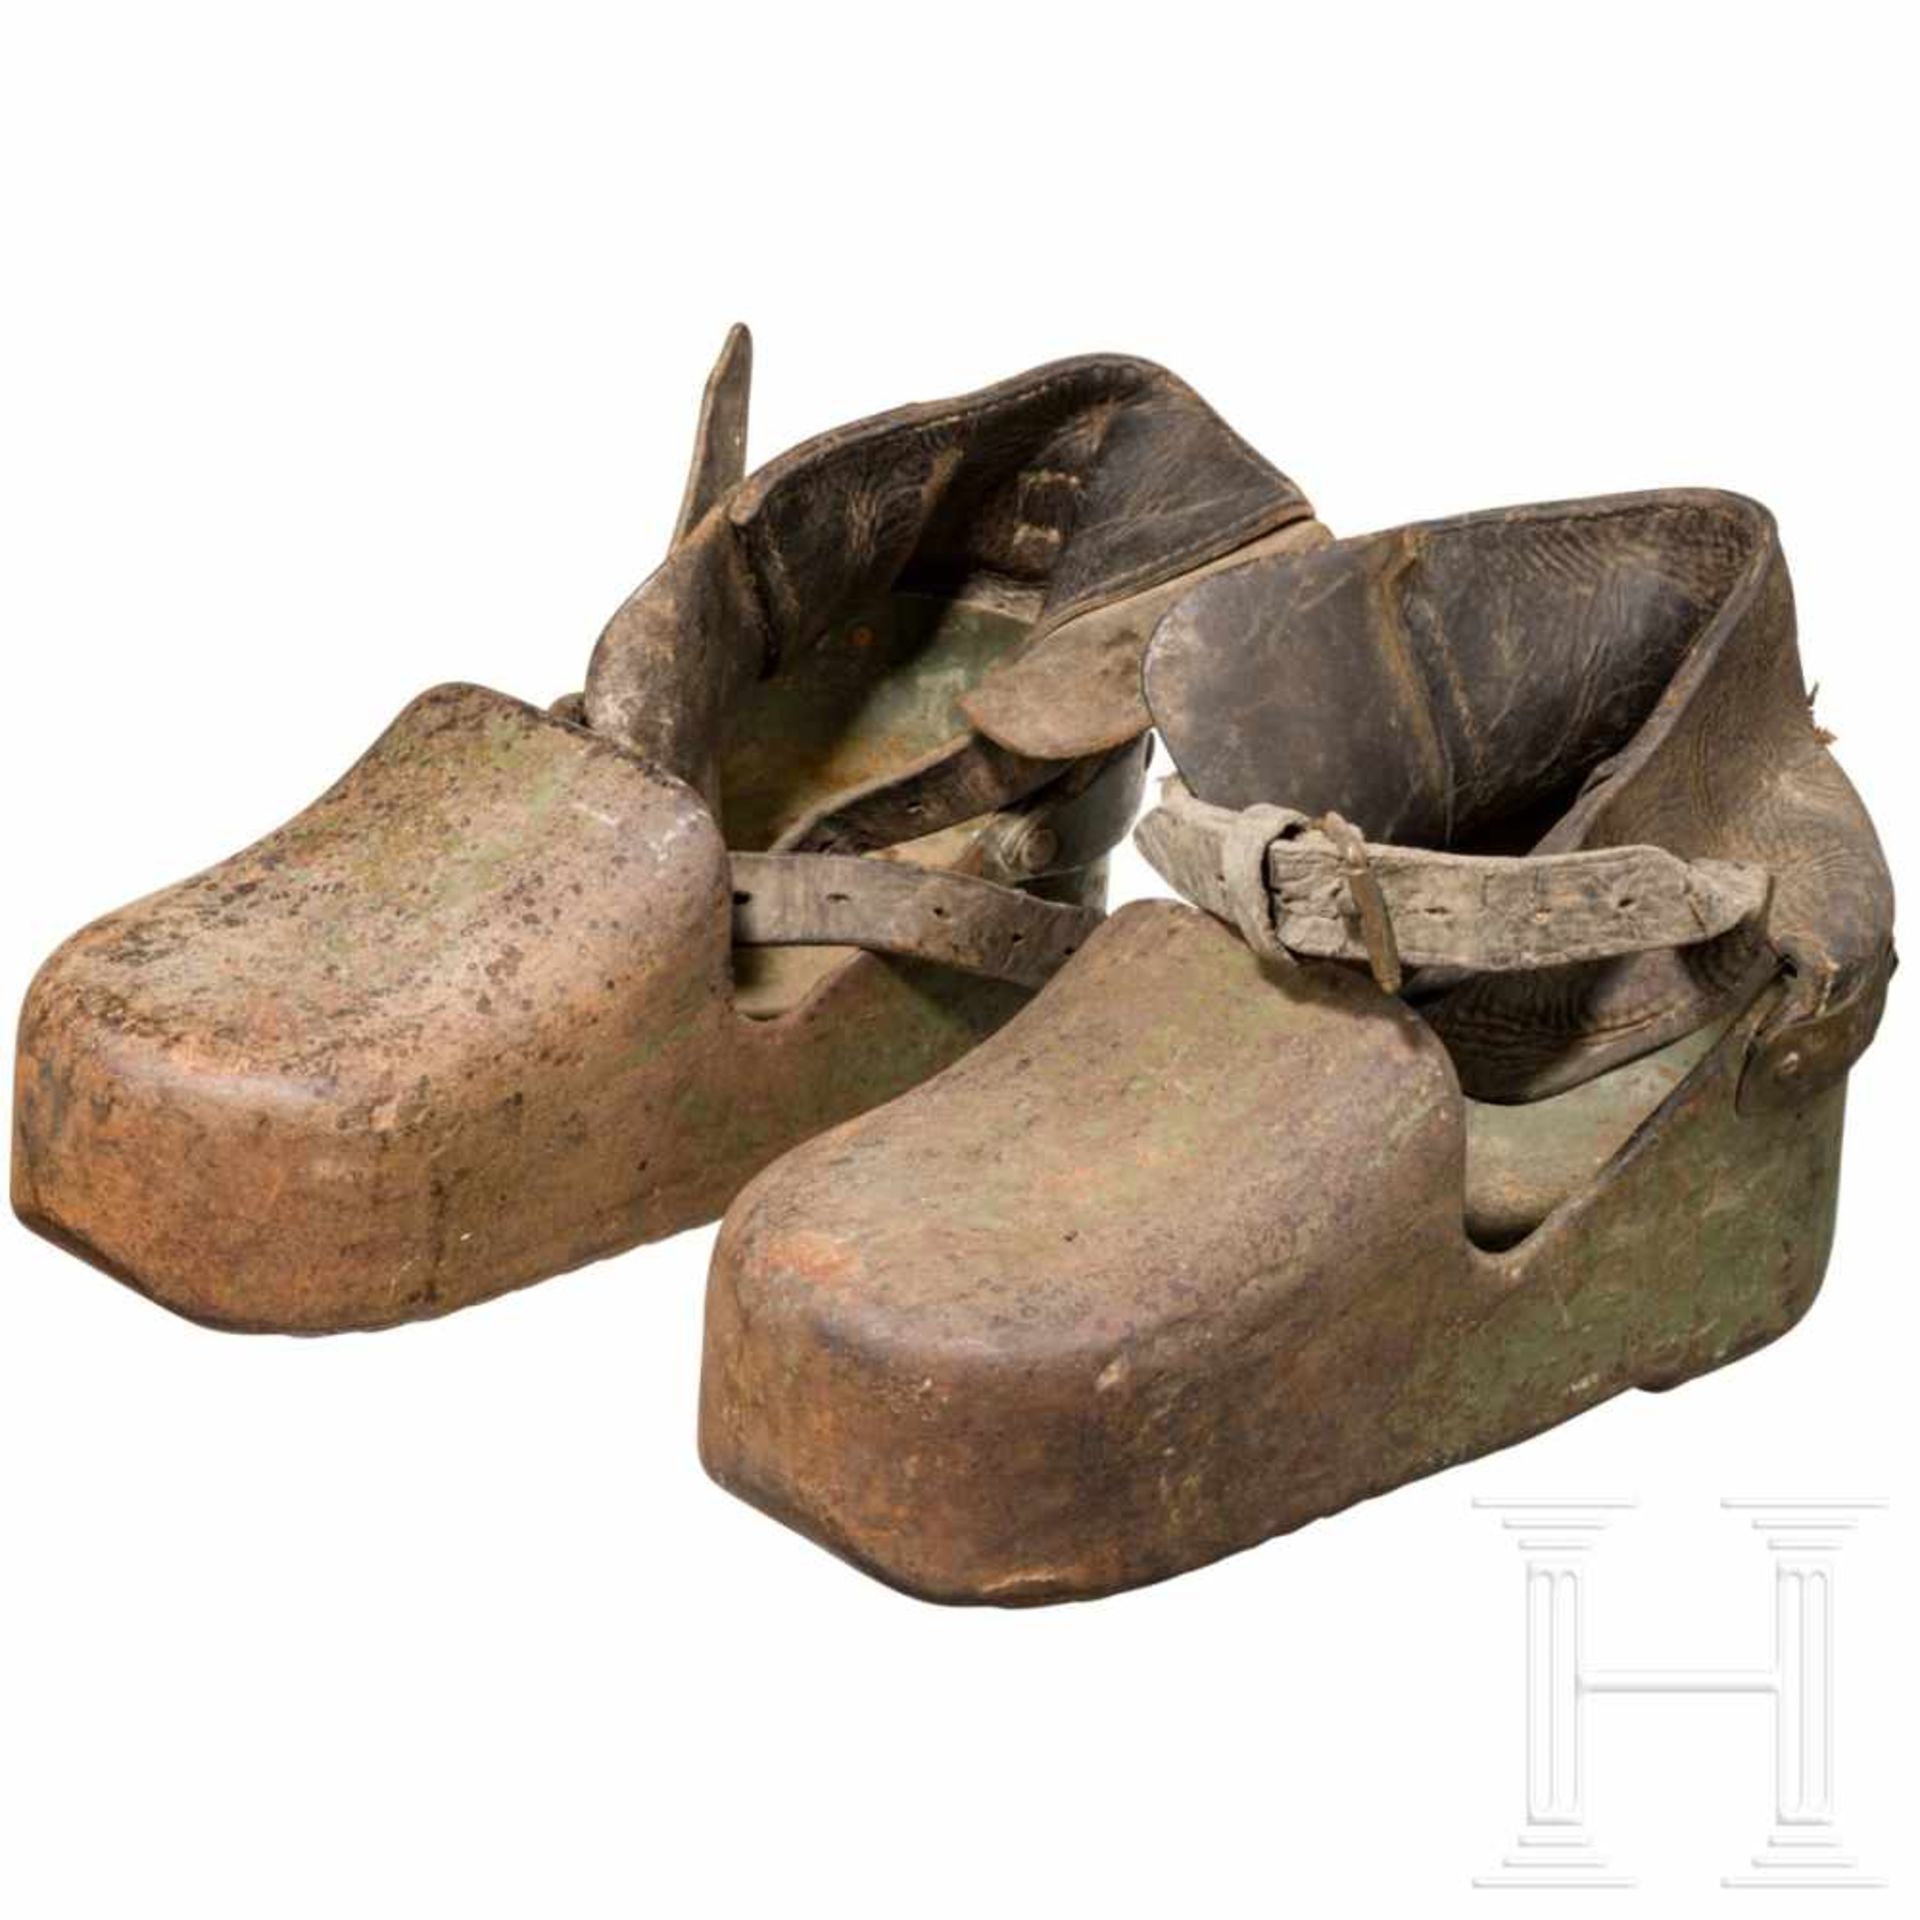 A pair of shoes for combat divers, 1st half of the 20th centuryJeweils schwerer Eisenkorpus mit